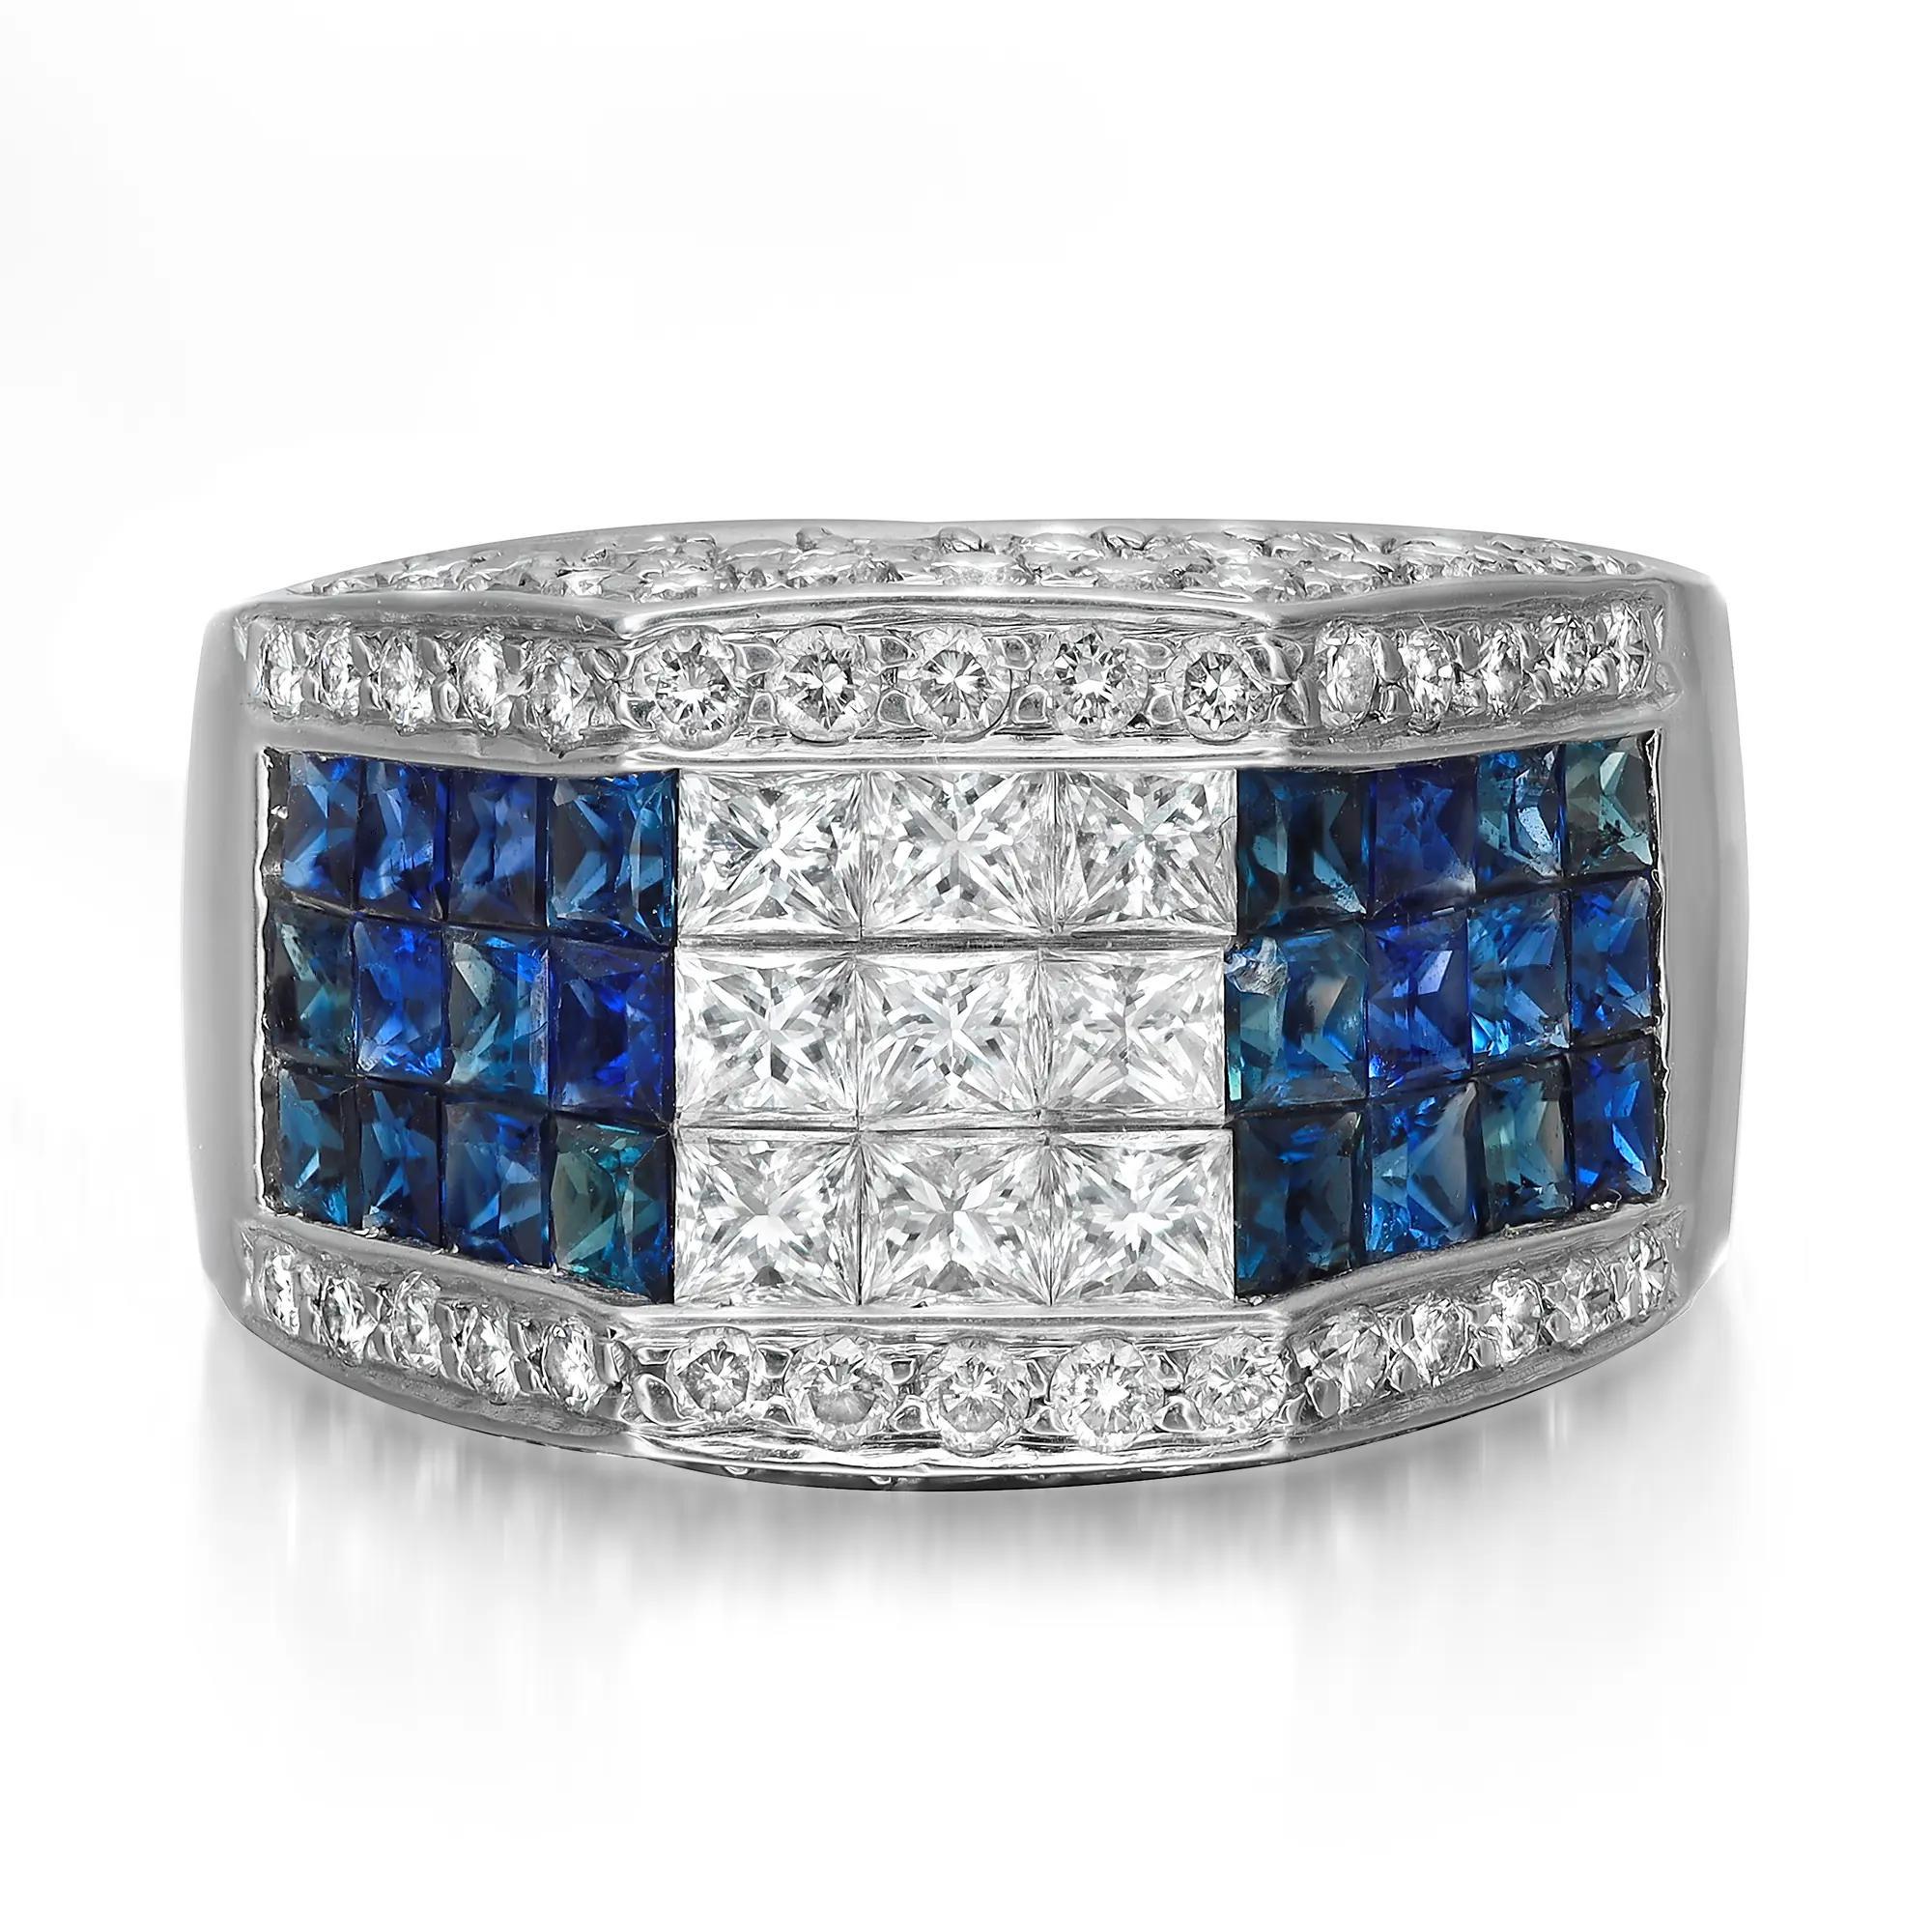 Princess Cut 1.09Ctw Diamond & 1.20Ctw Blue Sapphire Cocktail Ring 18K White Gold Size 7 For Sale